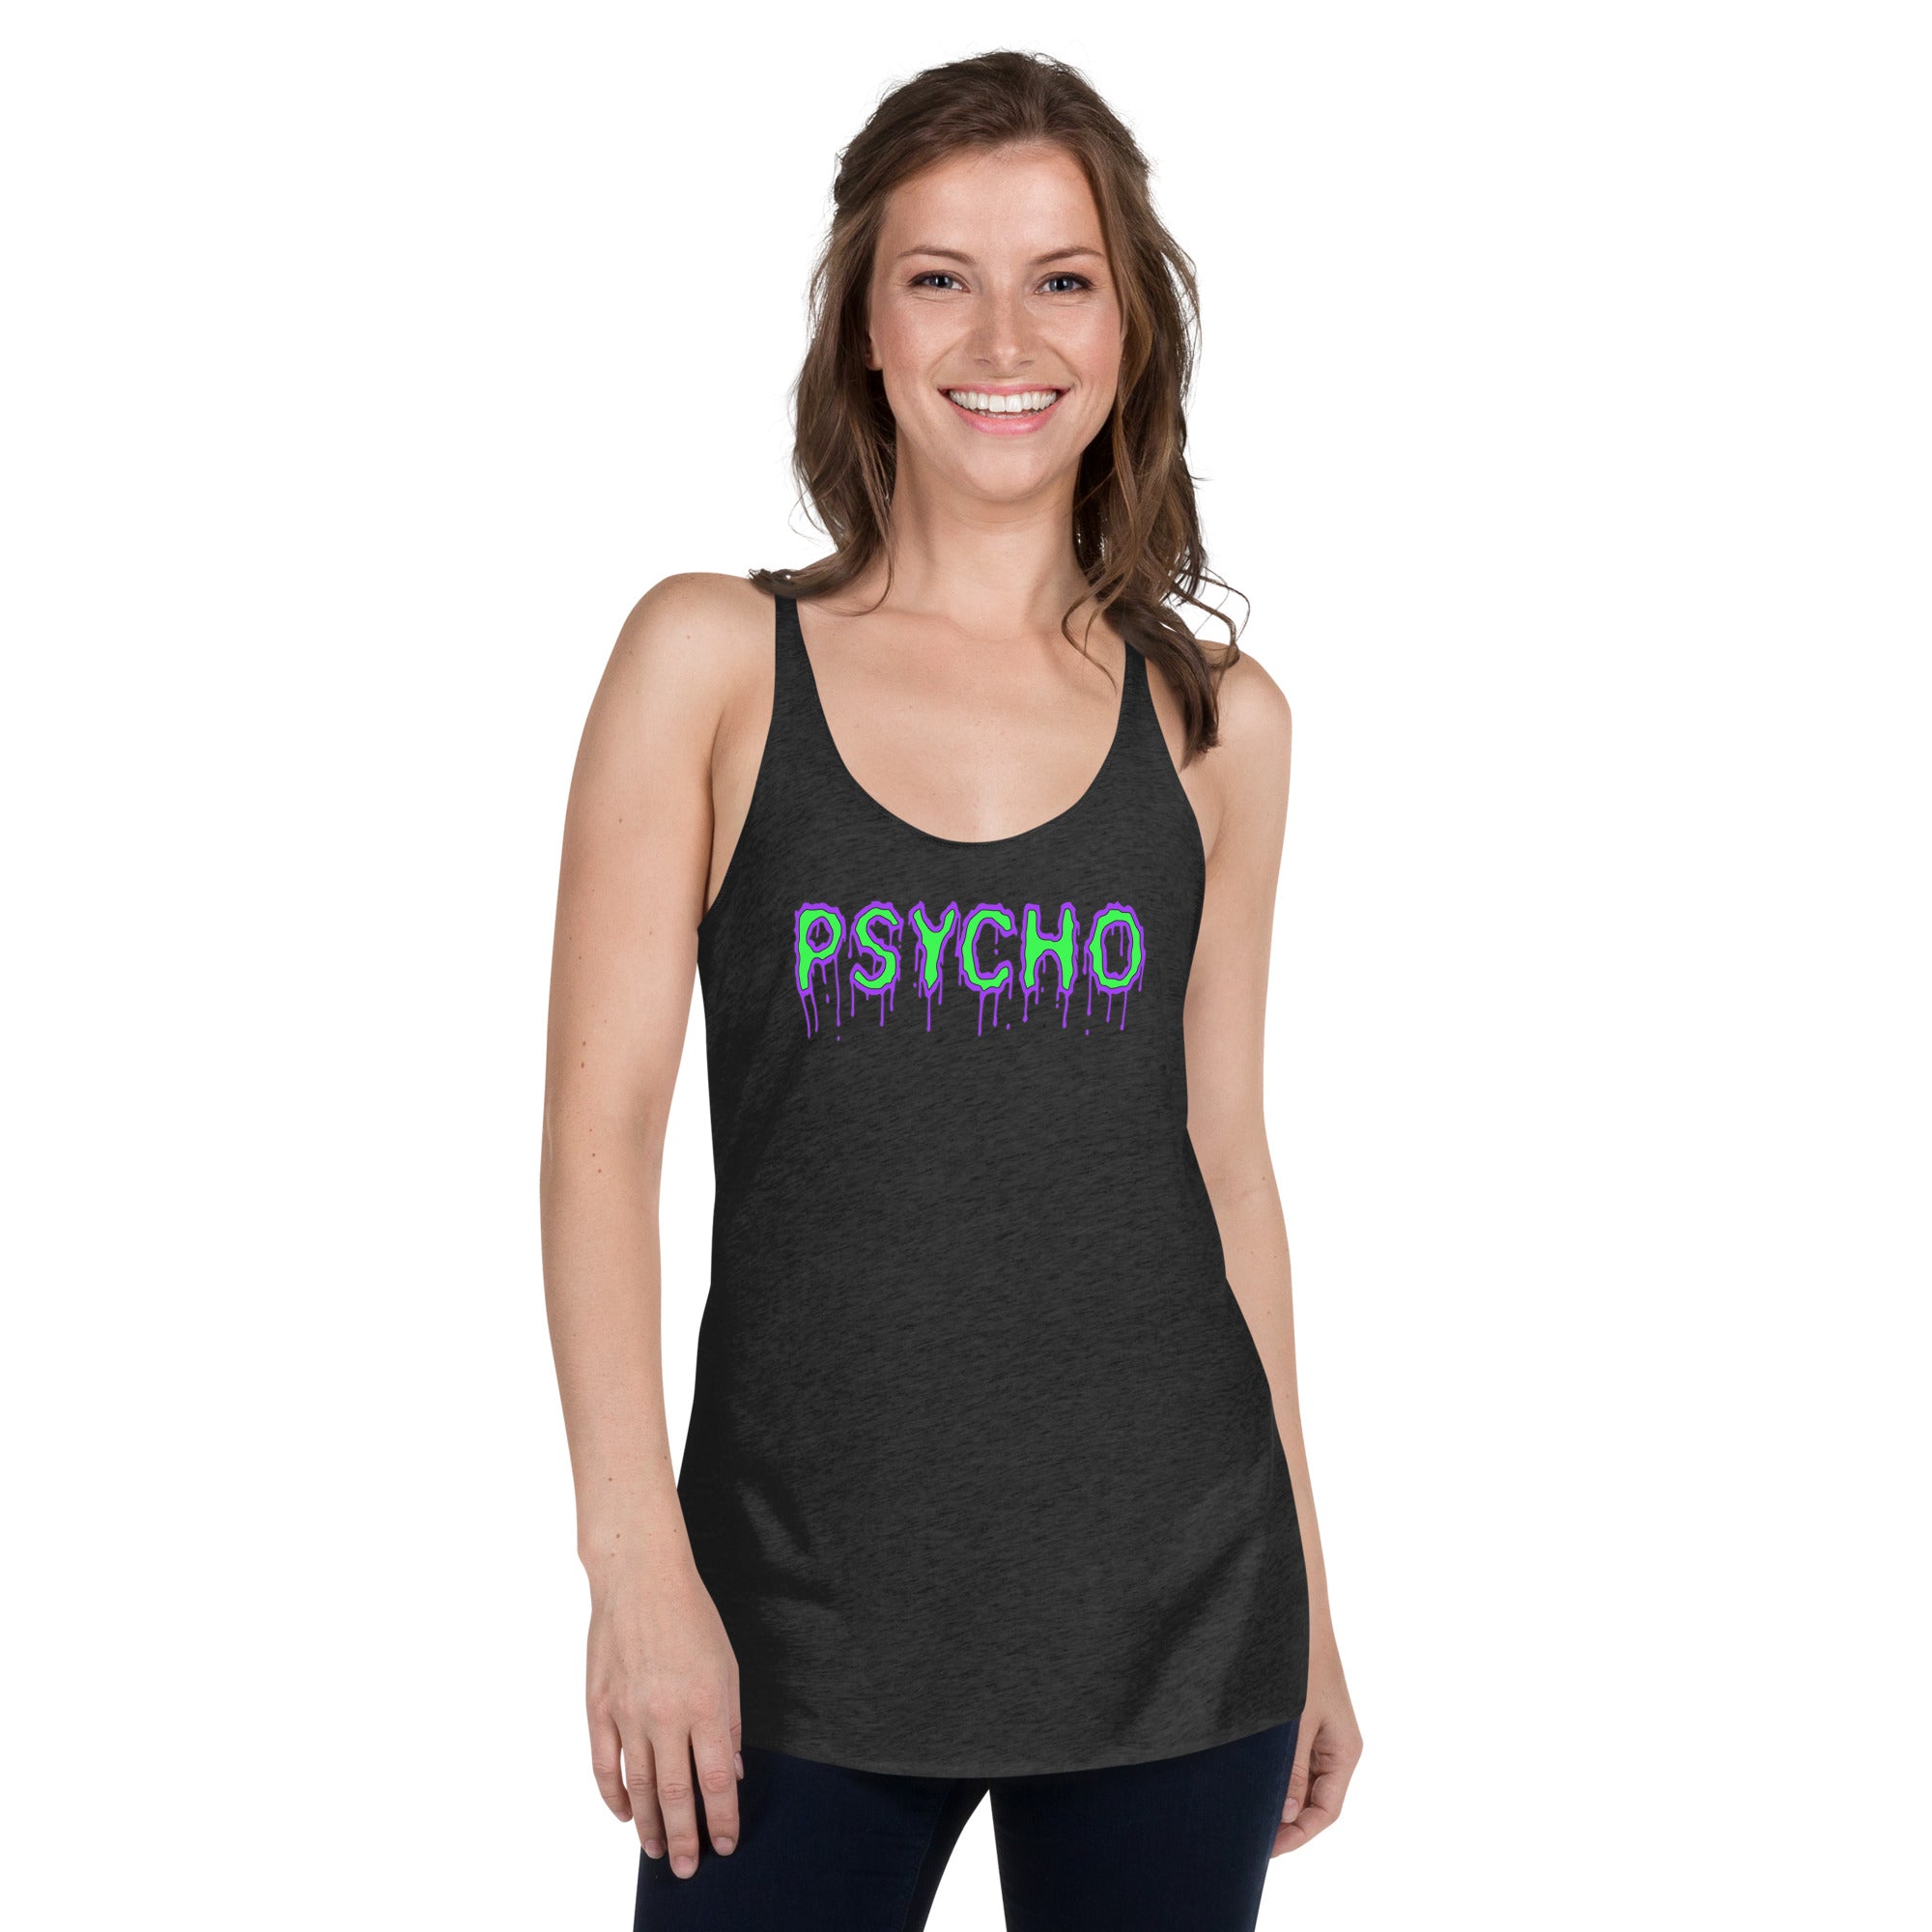 Psycho Mental Personality Women's Racerback Tank Top Shirt